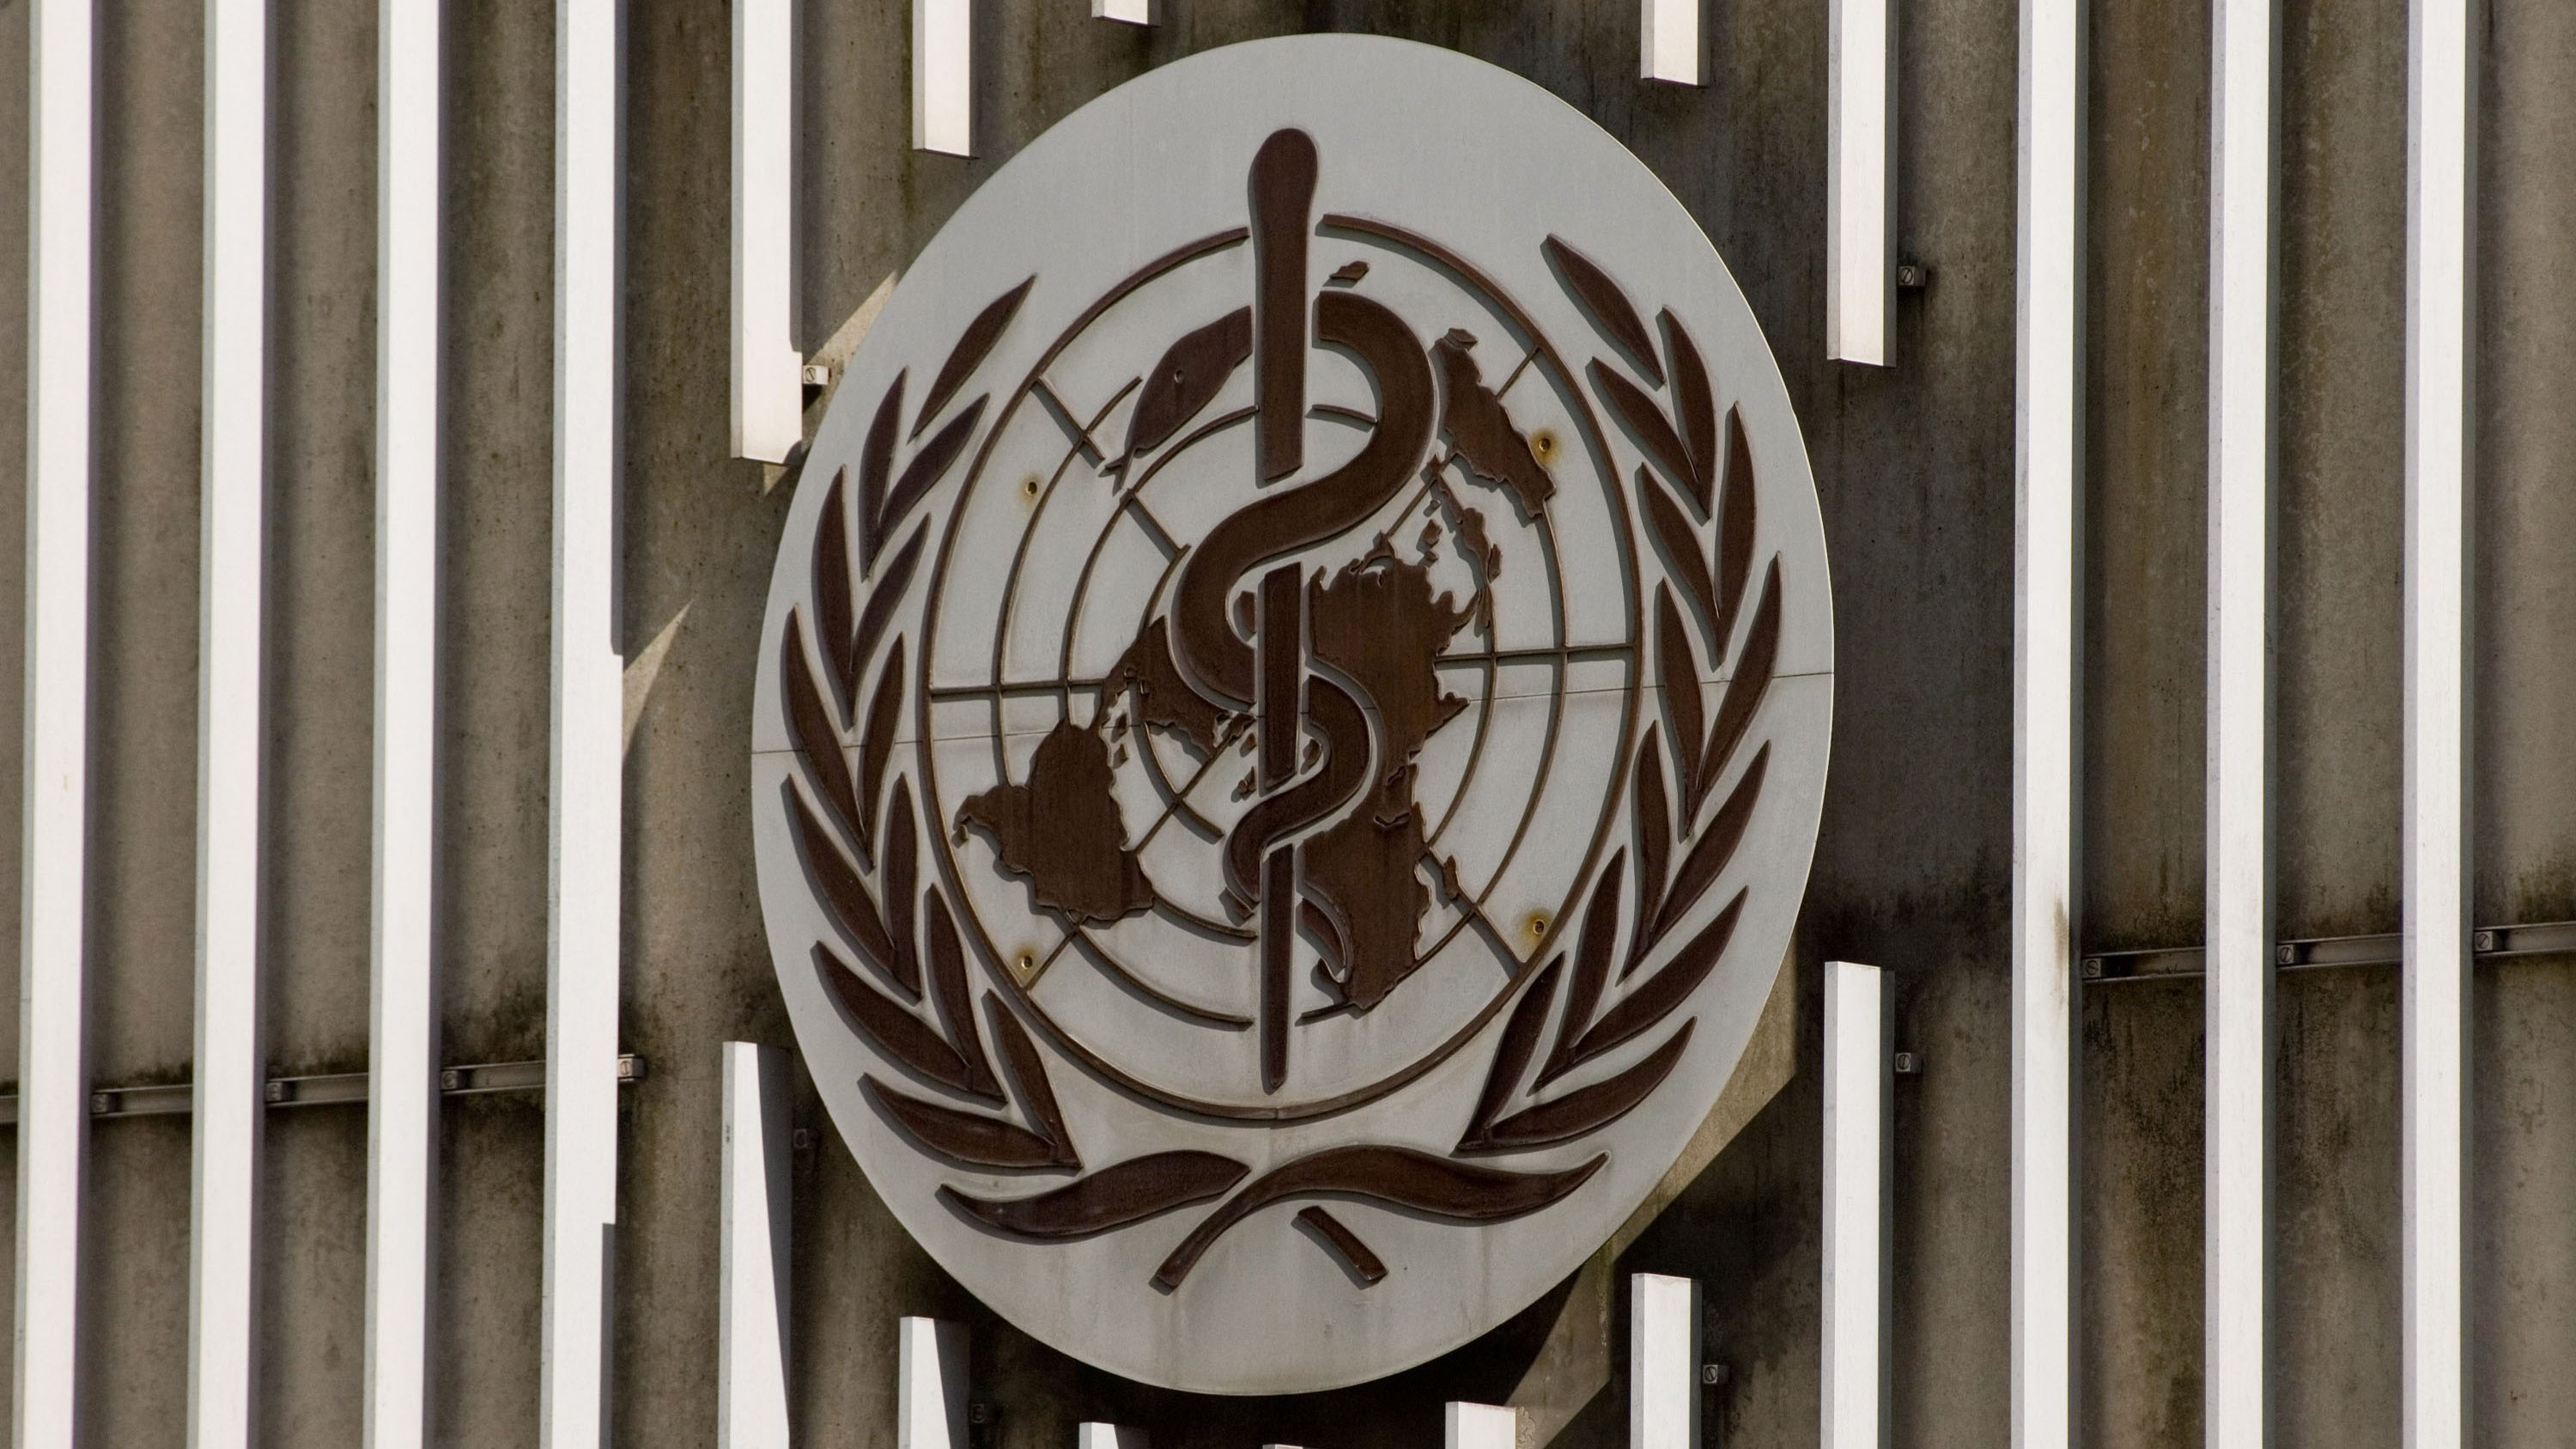 General Views Of The World Health Organization